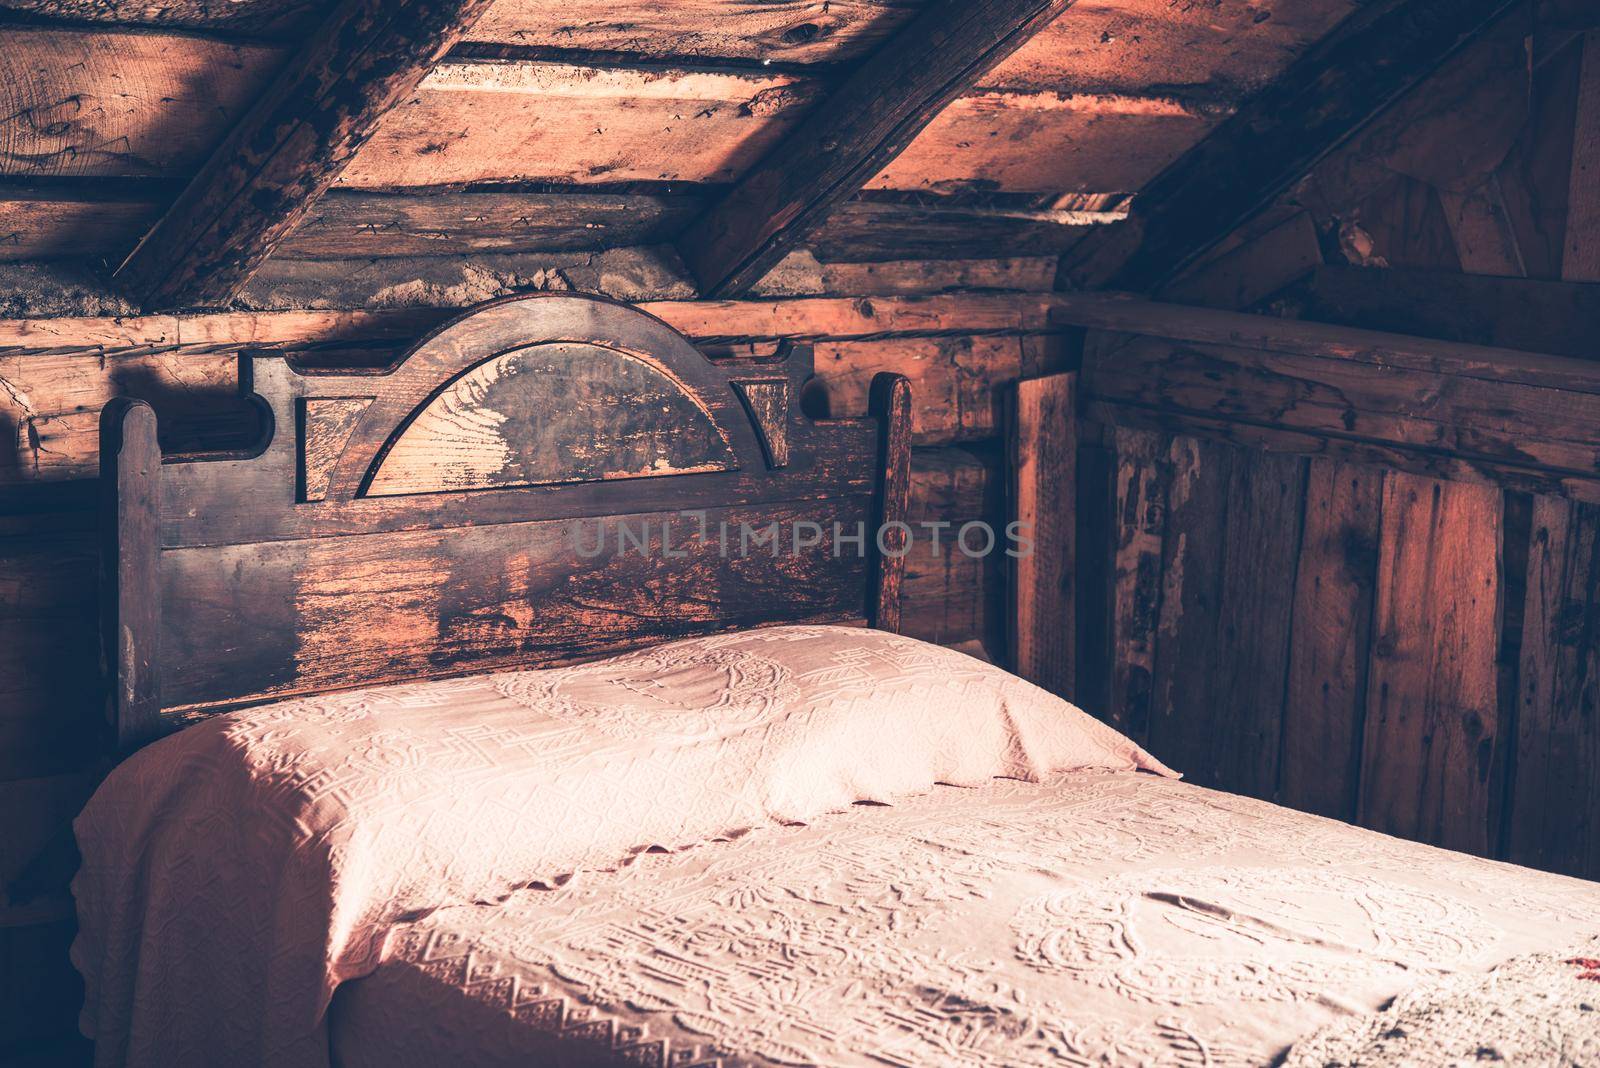 Old Wooden Cabin Bedroom. Aged Cabin Bed.